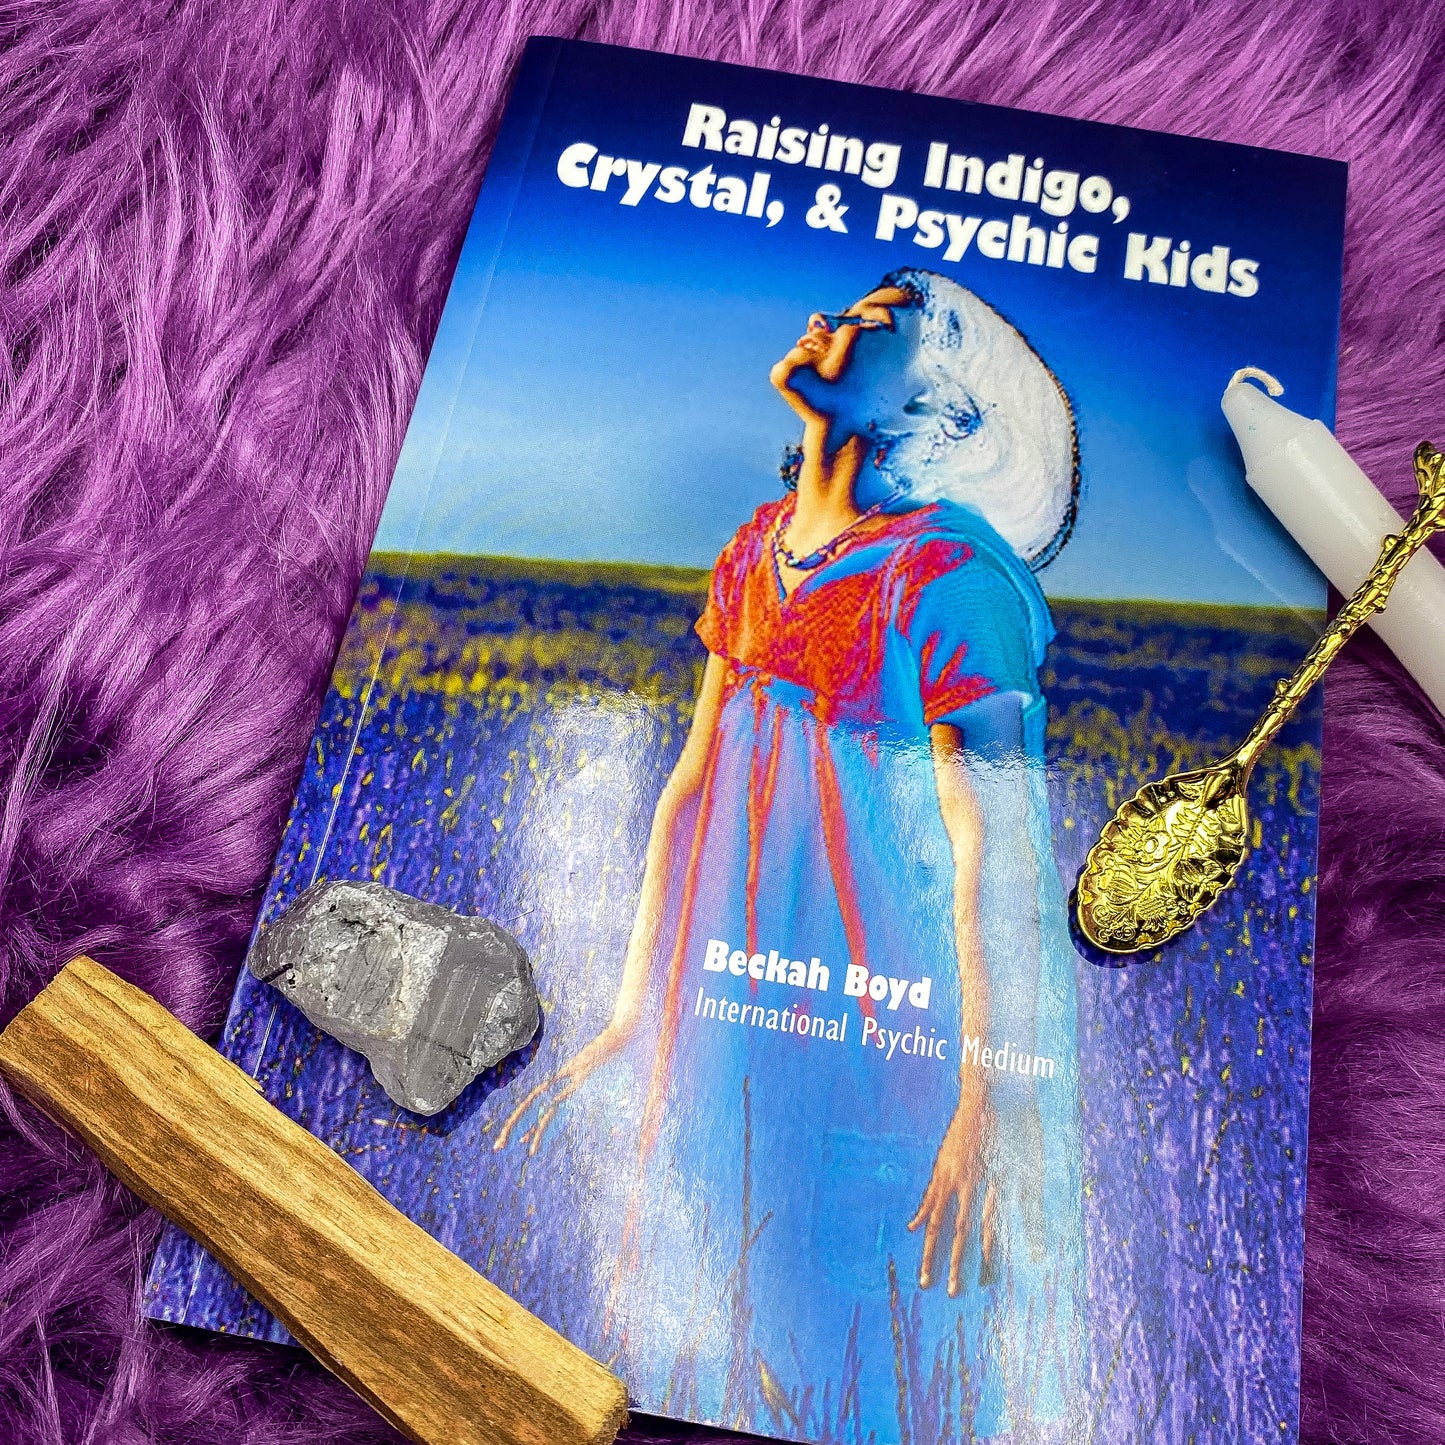 Raising Indigo, Crystal, & Psychic Kids by Beckah Boyd